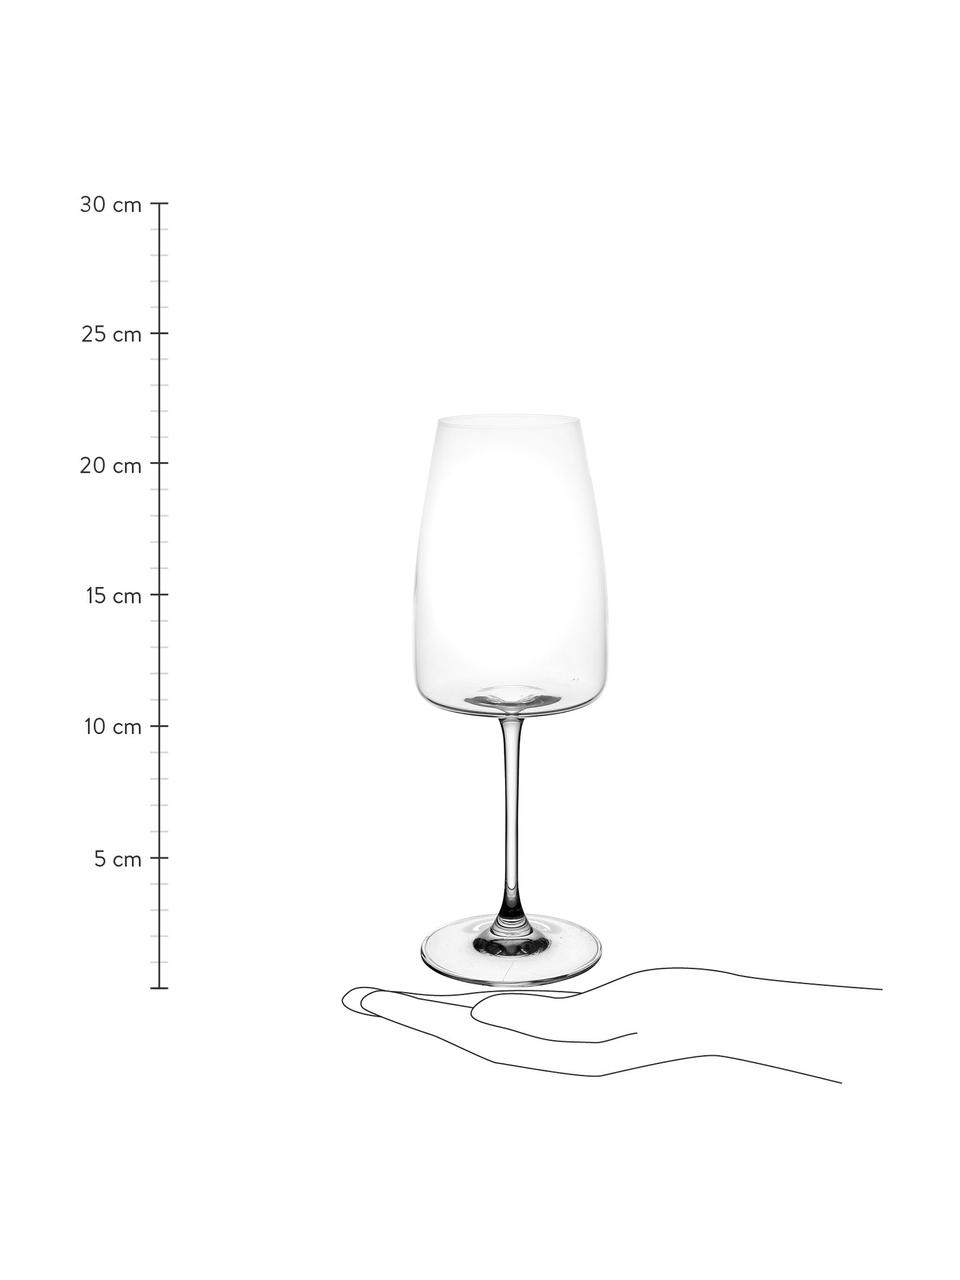 Kristallglas-Weißweingläser Moinet, 6 Stück, Kristallglas, Transparent, Ø 8 x H 22 cm, 450 ml